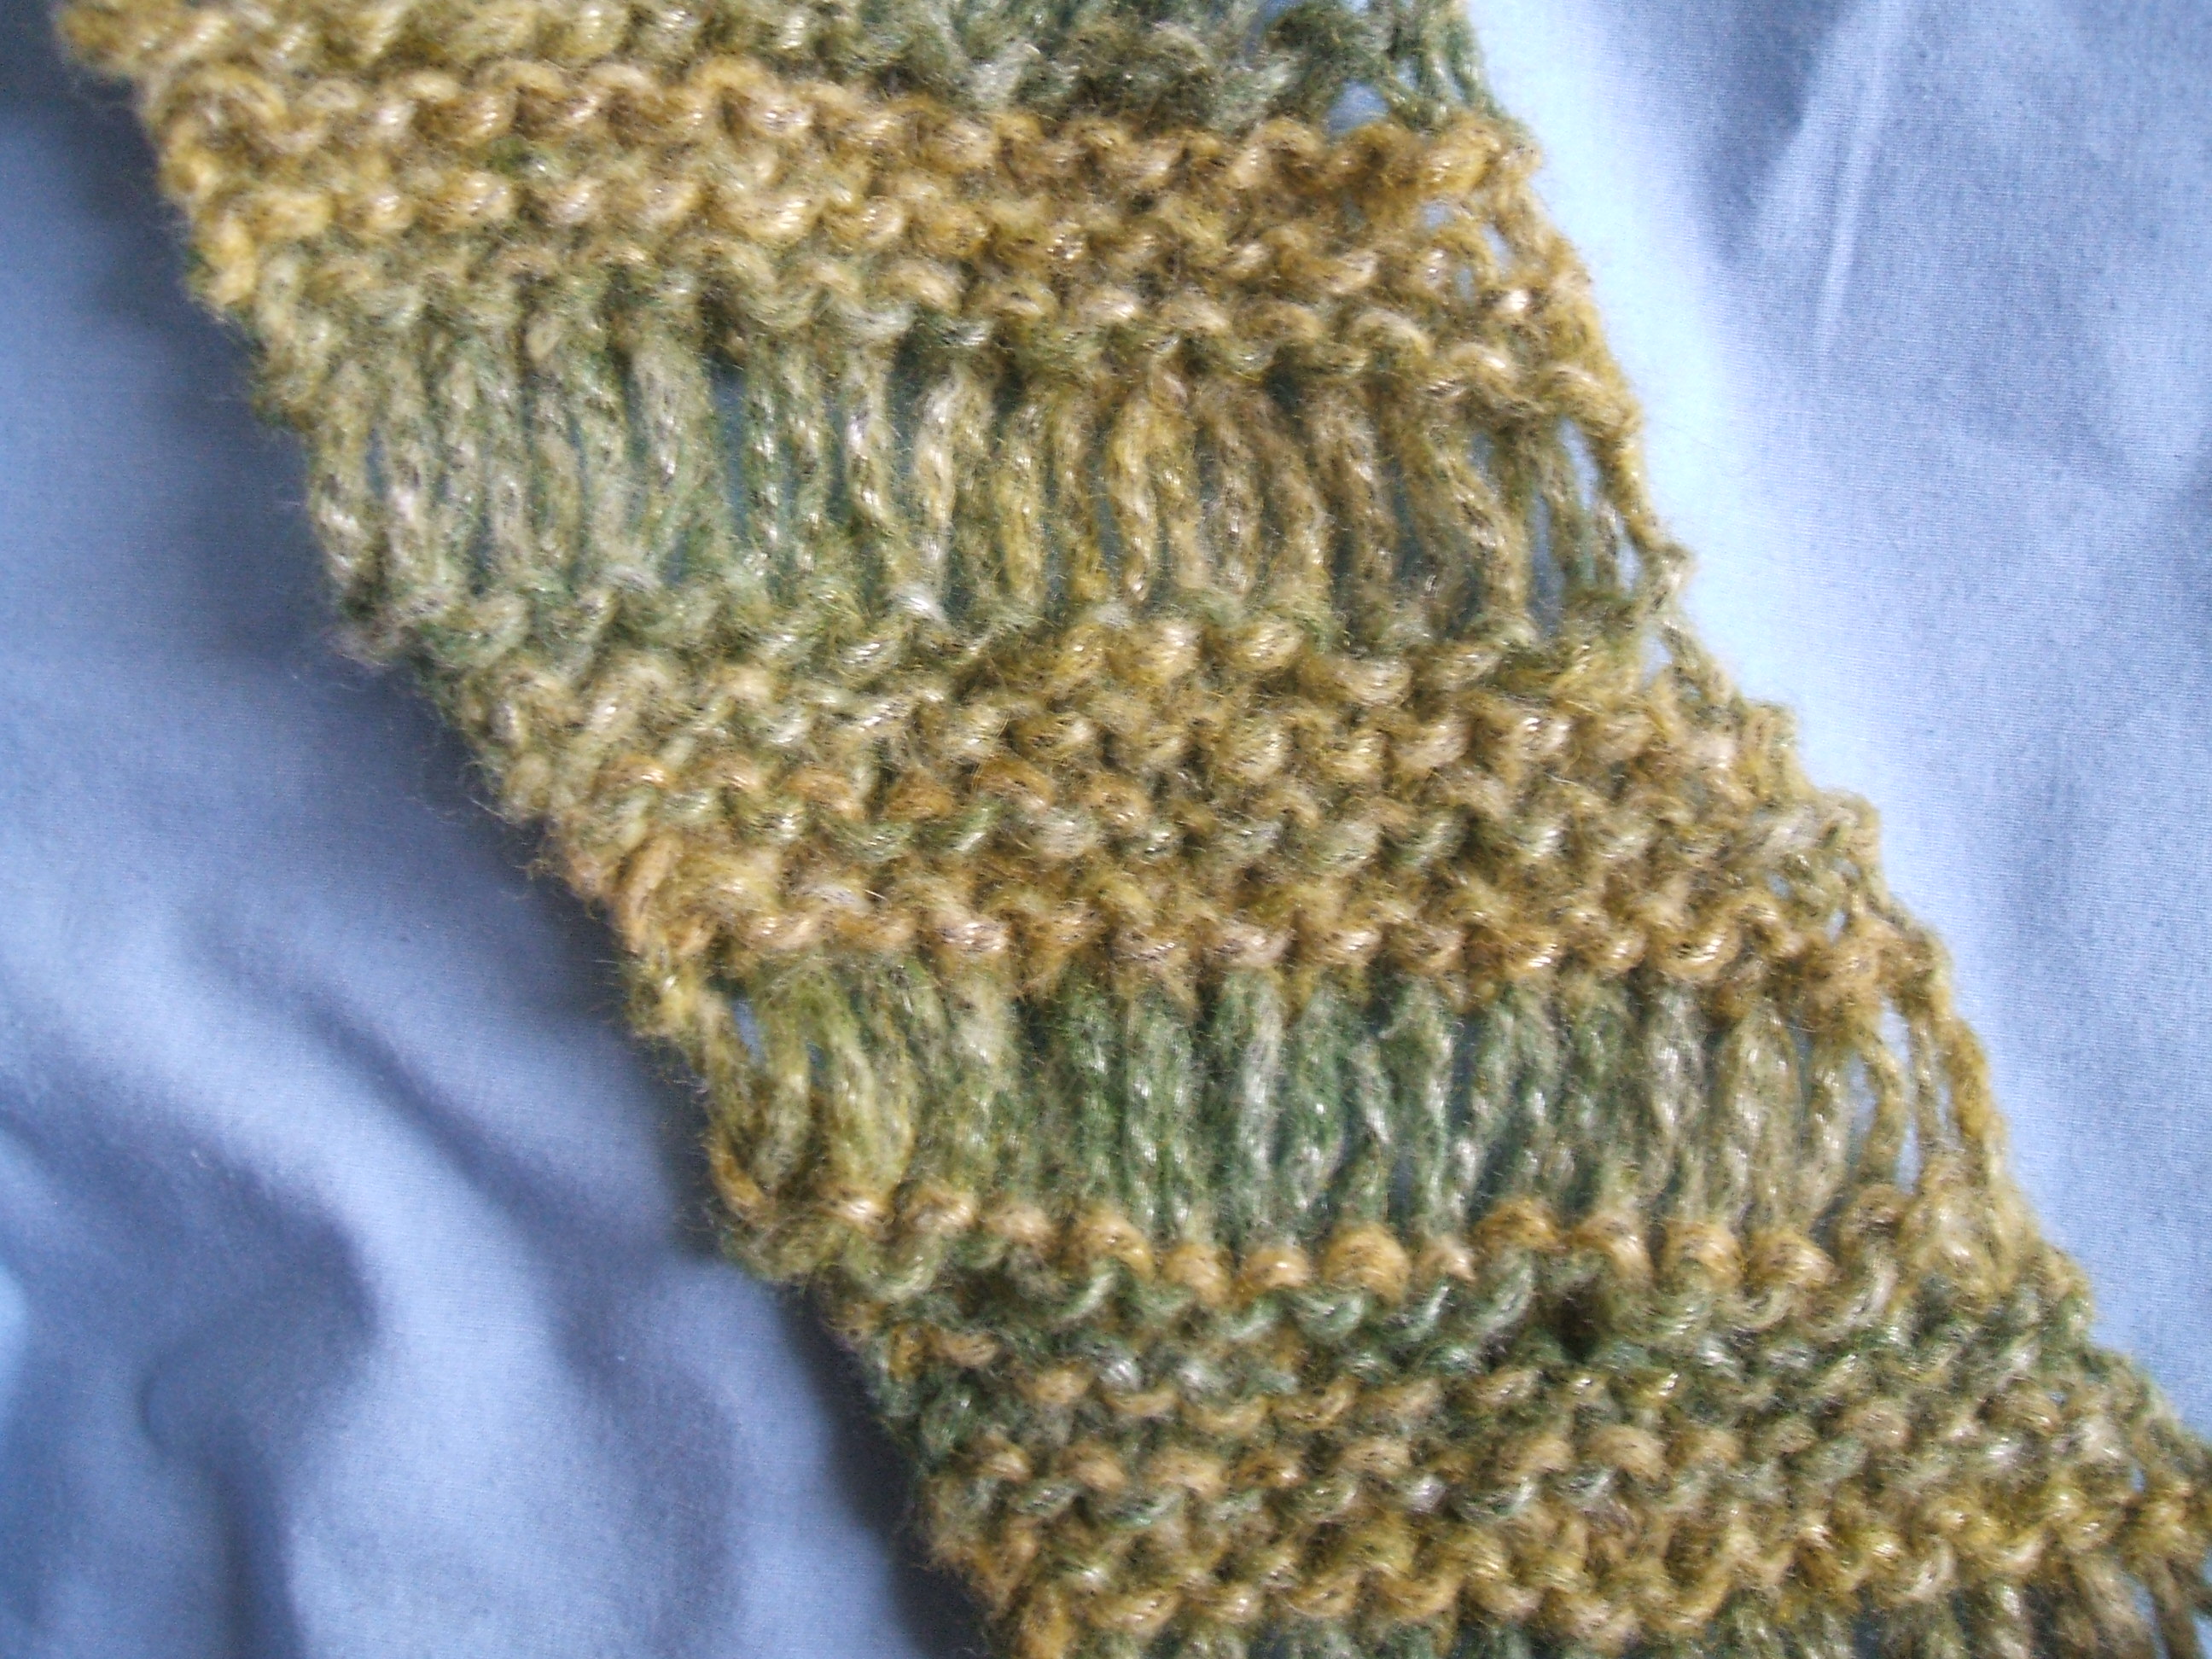 Easy Knitting Pattern For A Scarf-Condo Stitch Scarf